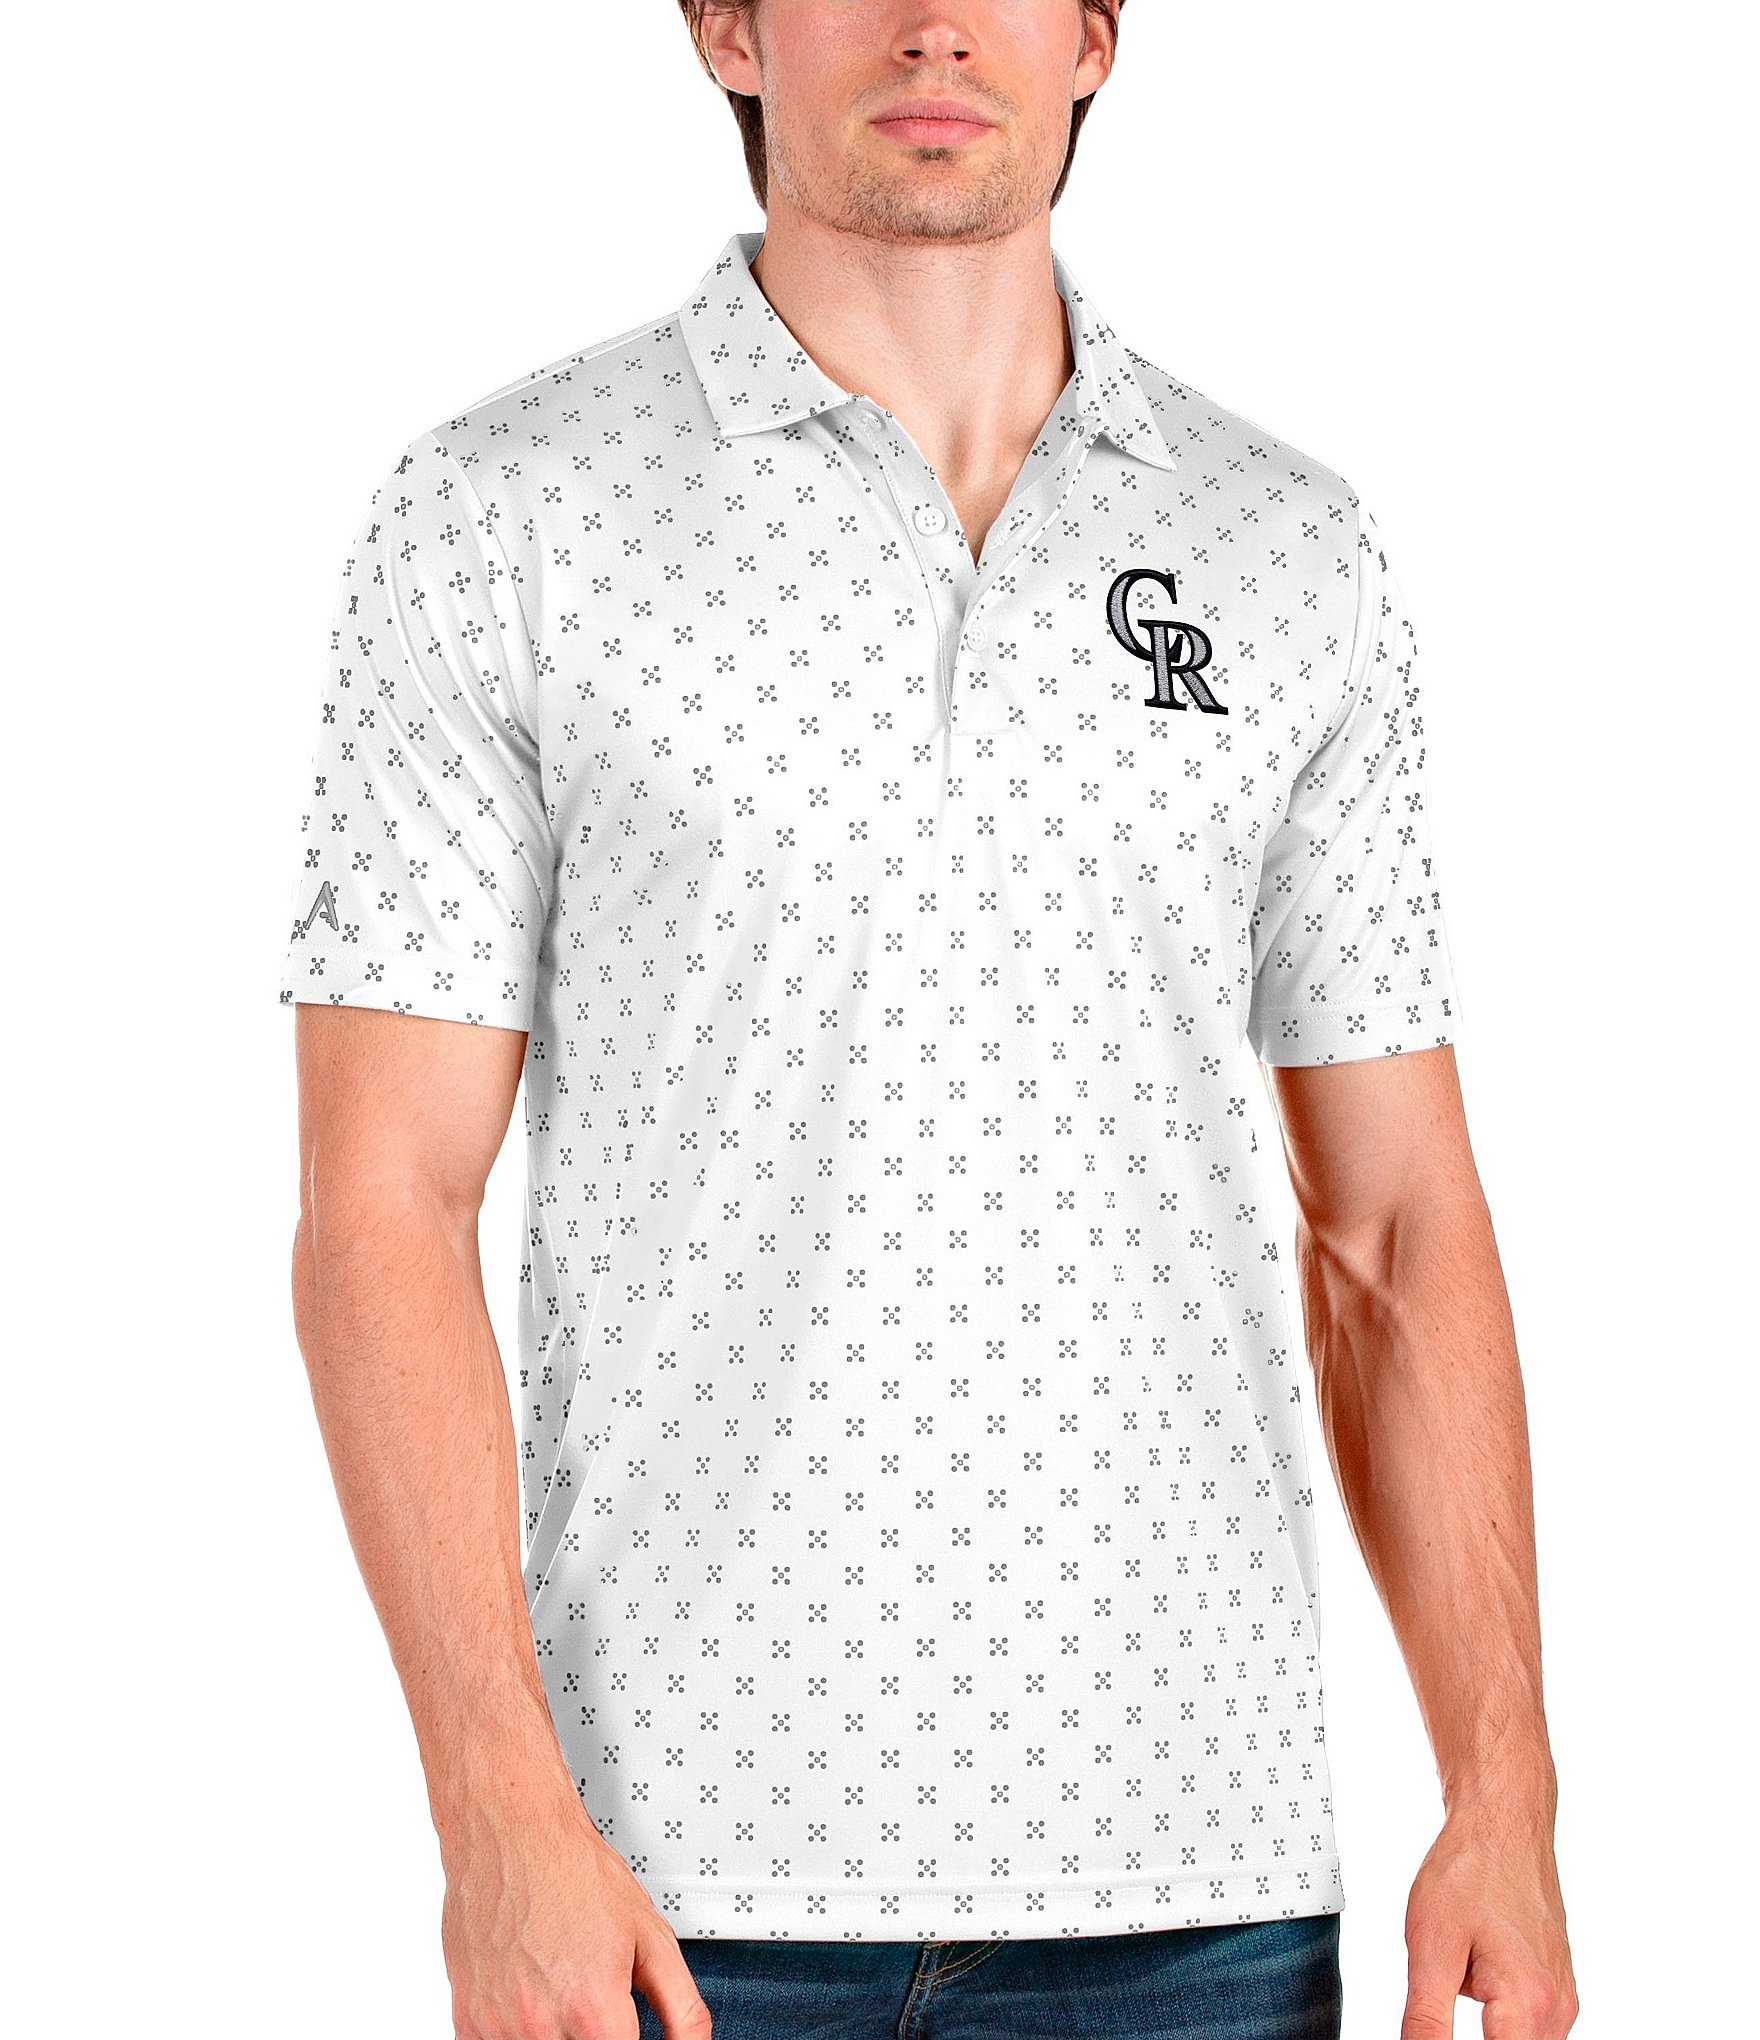 UMPS CARE AUCTION MLBUMPS CARE Logo Antigua Elite Polo Shirt Navy with  White Trim Size L  MLB Auctions